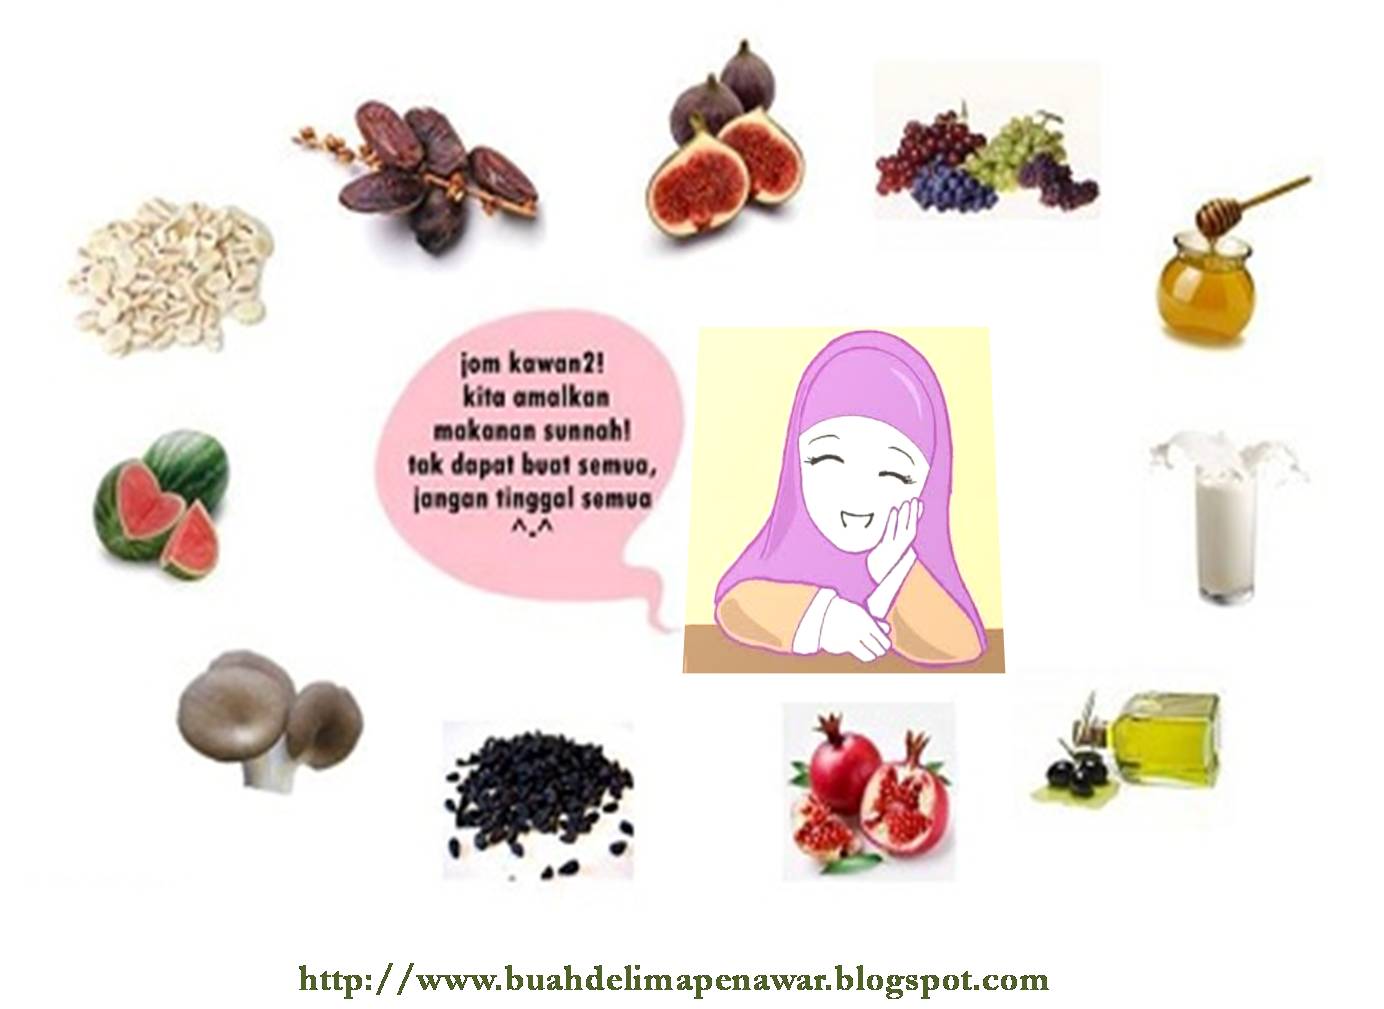 Buah Delima Al-Rumman: Makanan sunnah